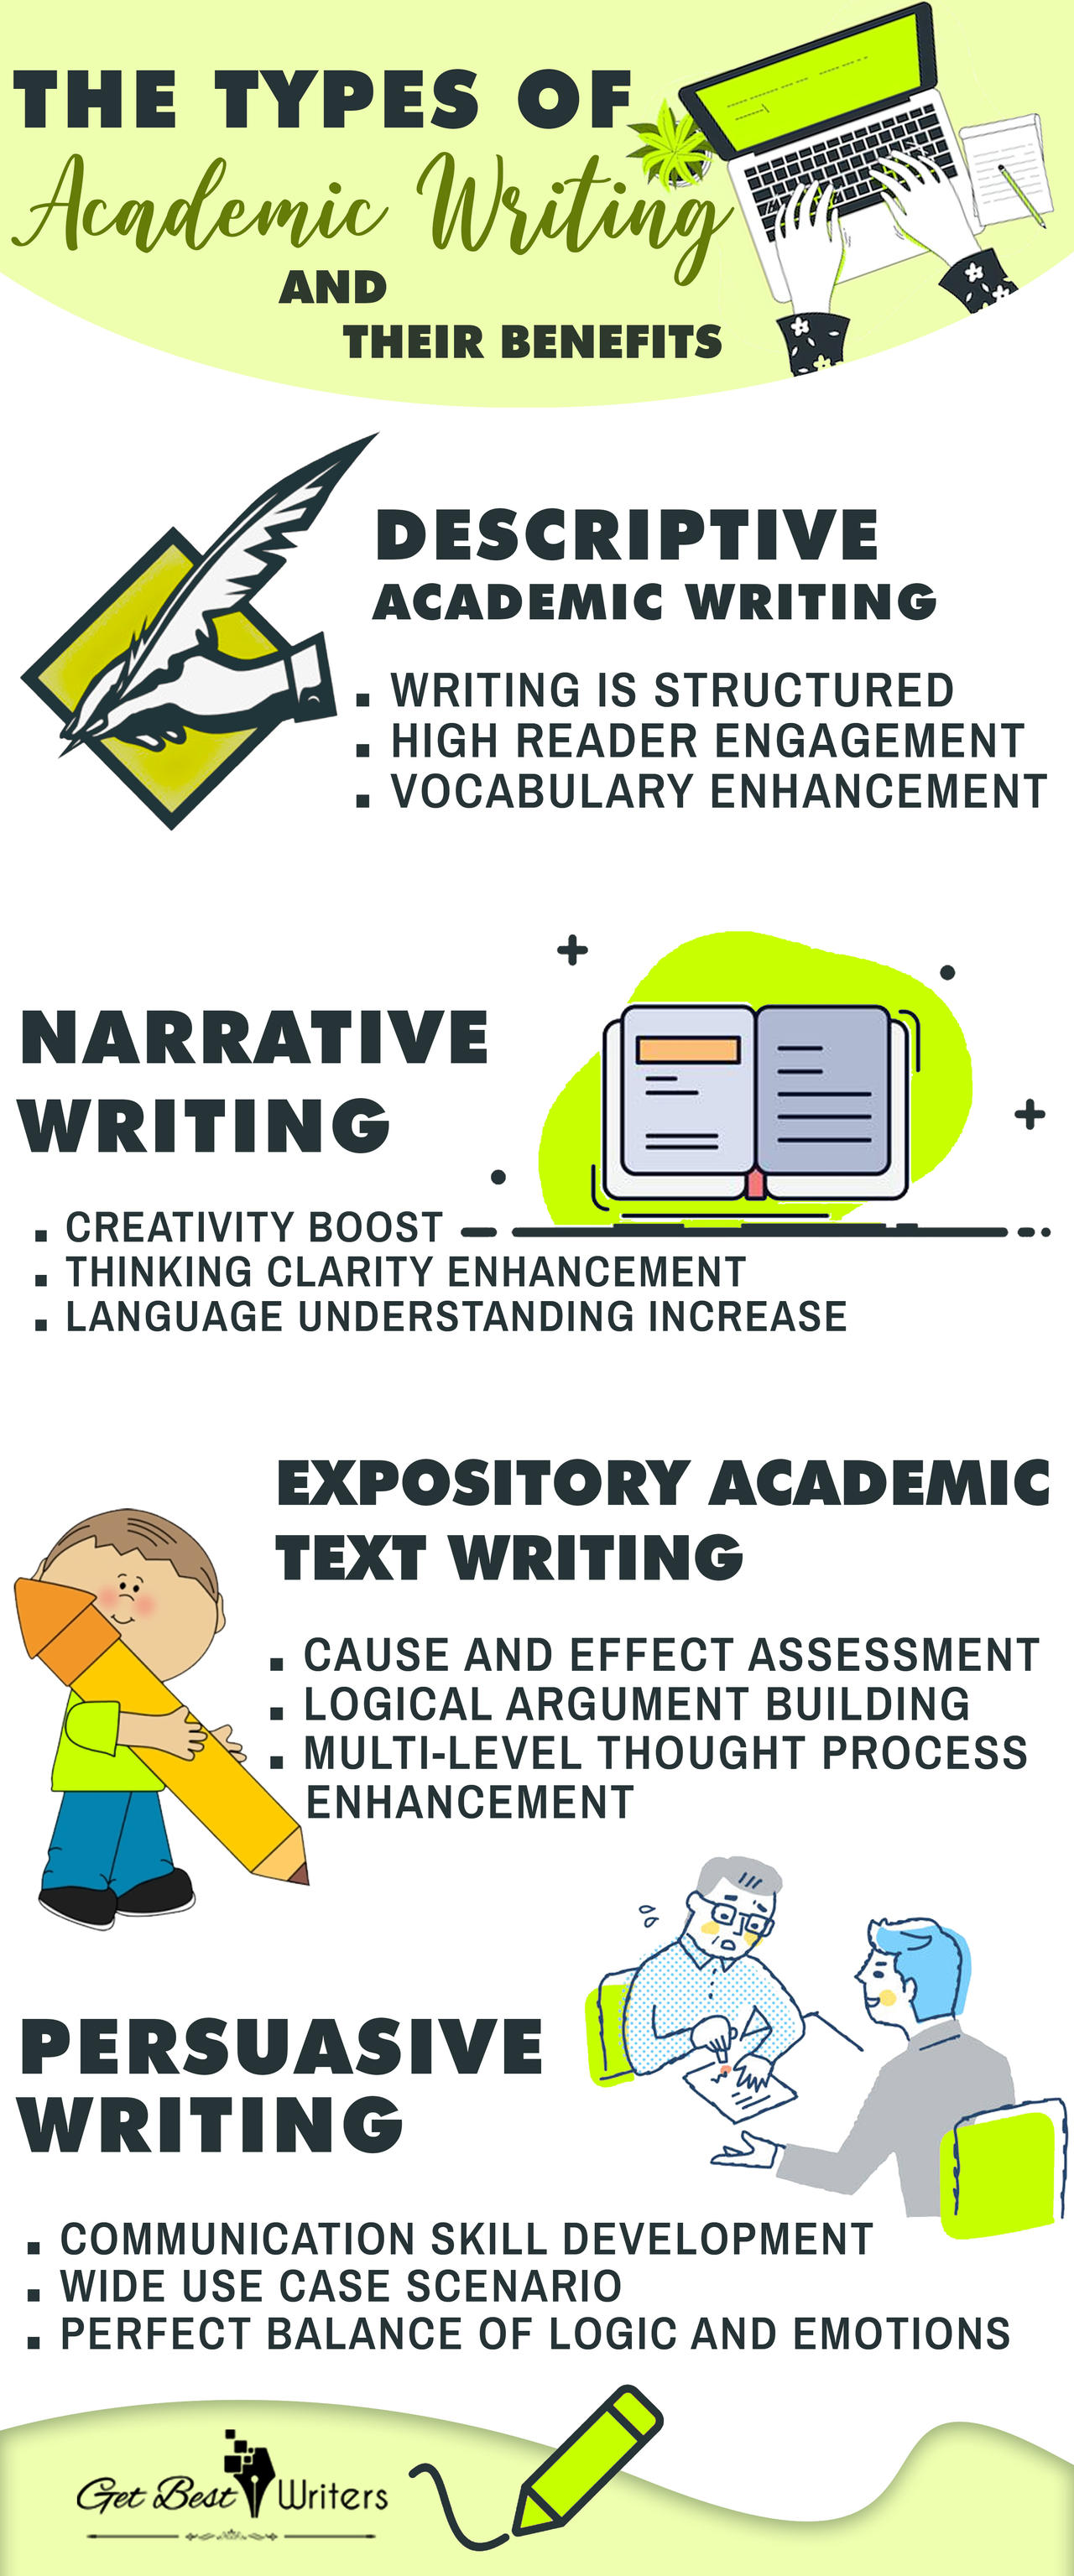 narrative academic writing